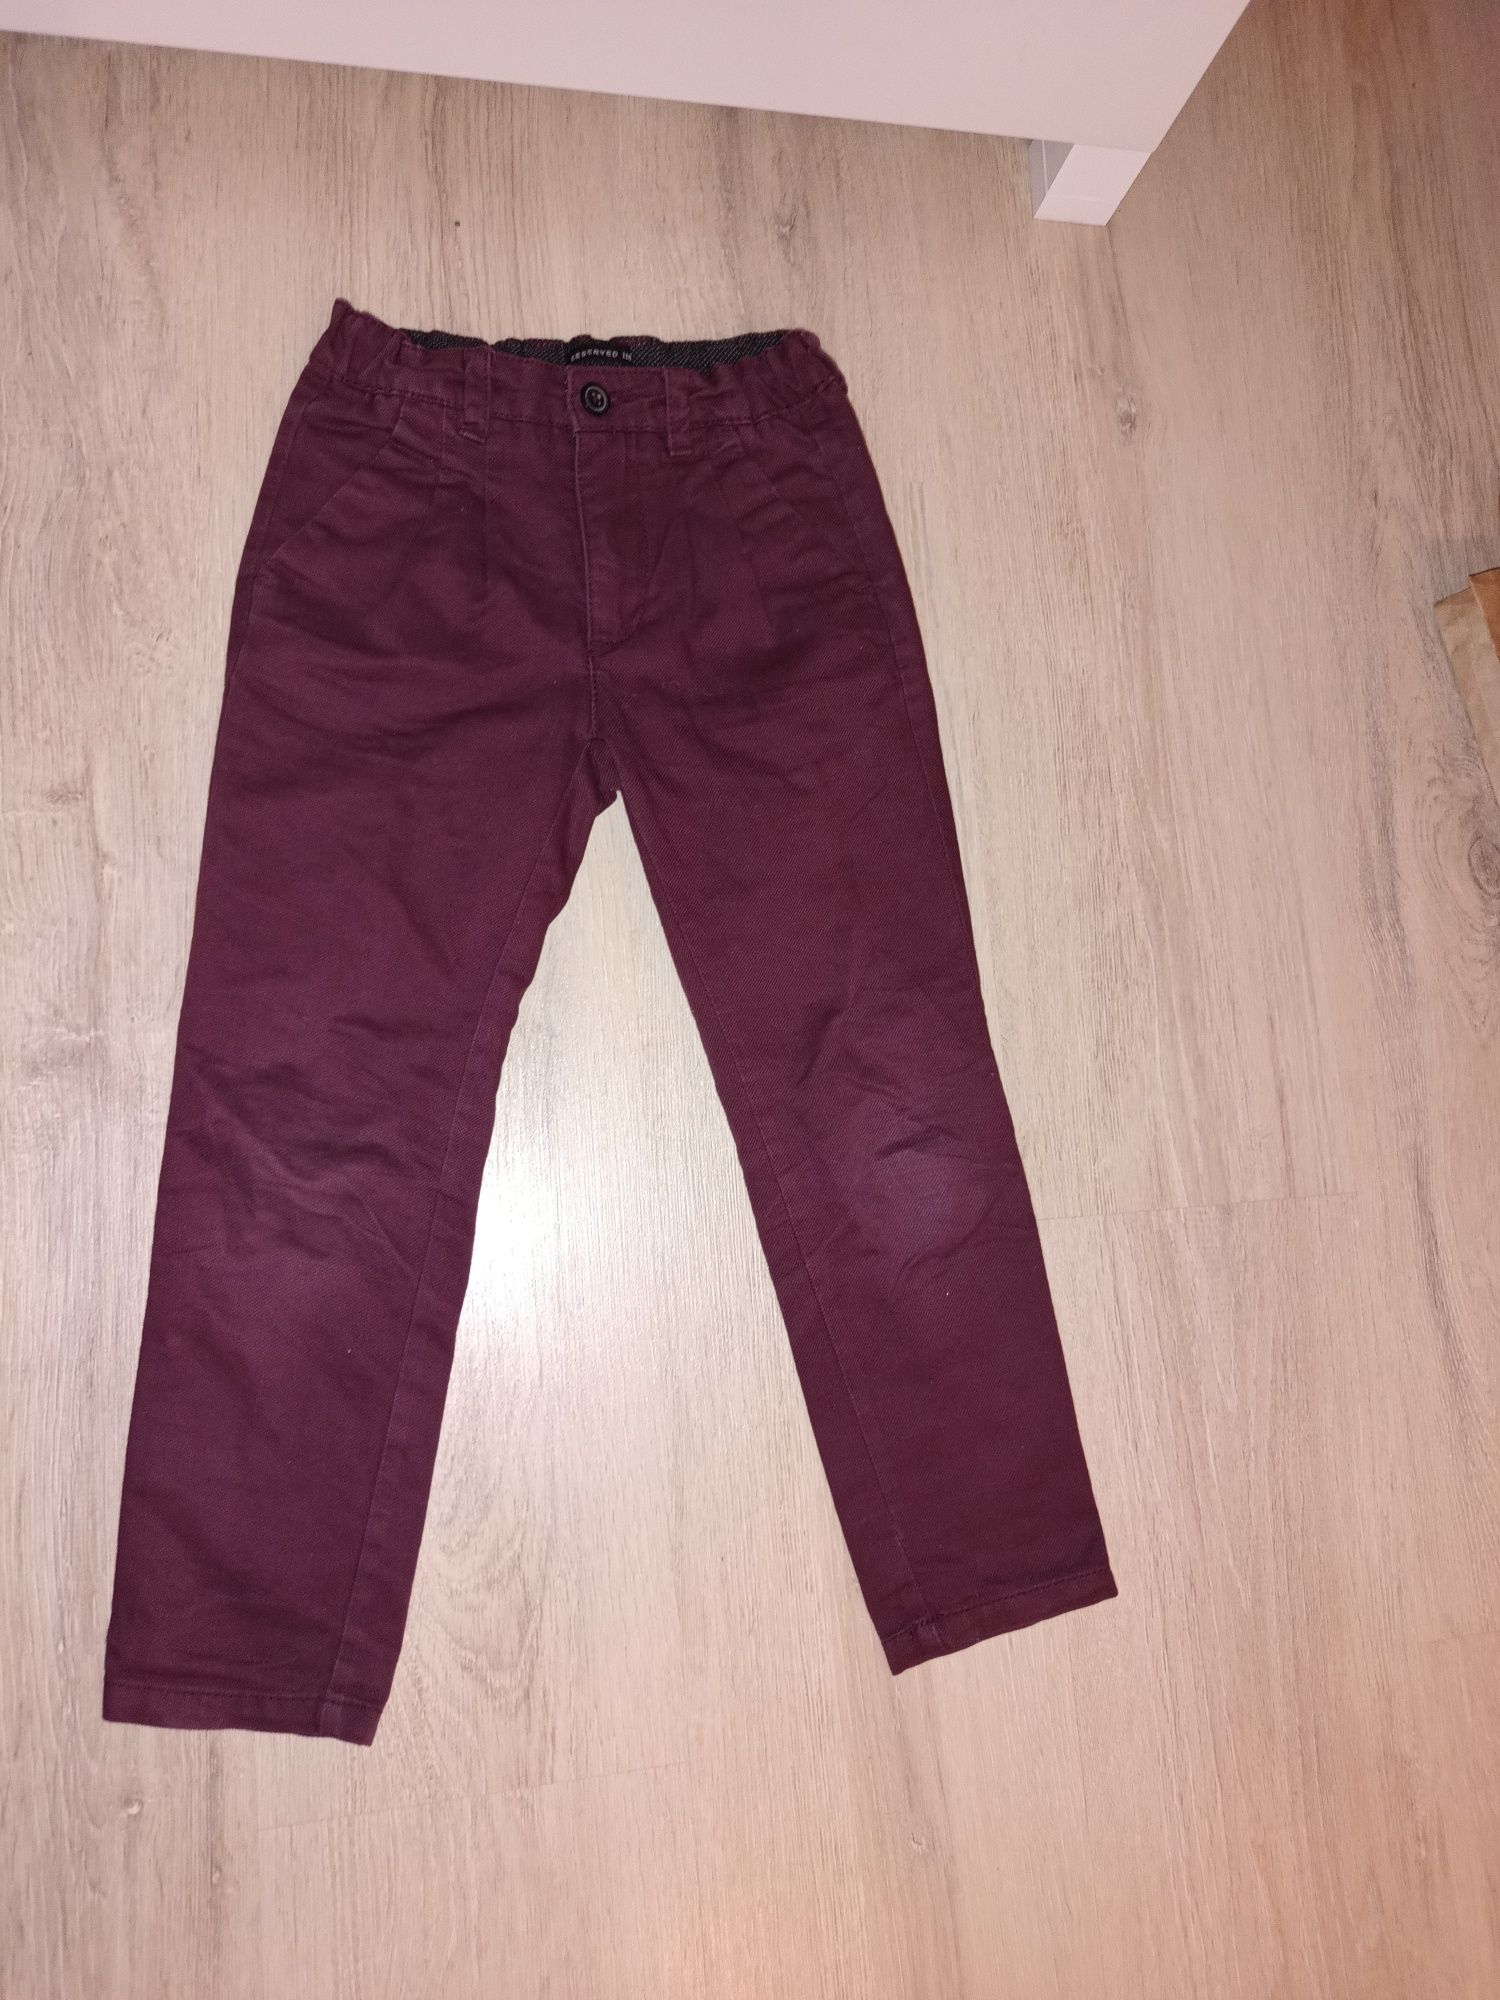 Reserved spodnie eleganckie, garniturowe roz 116